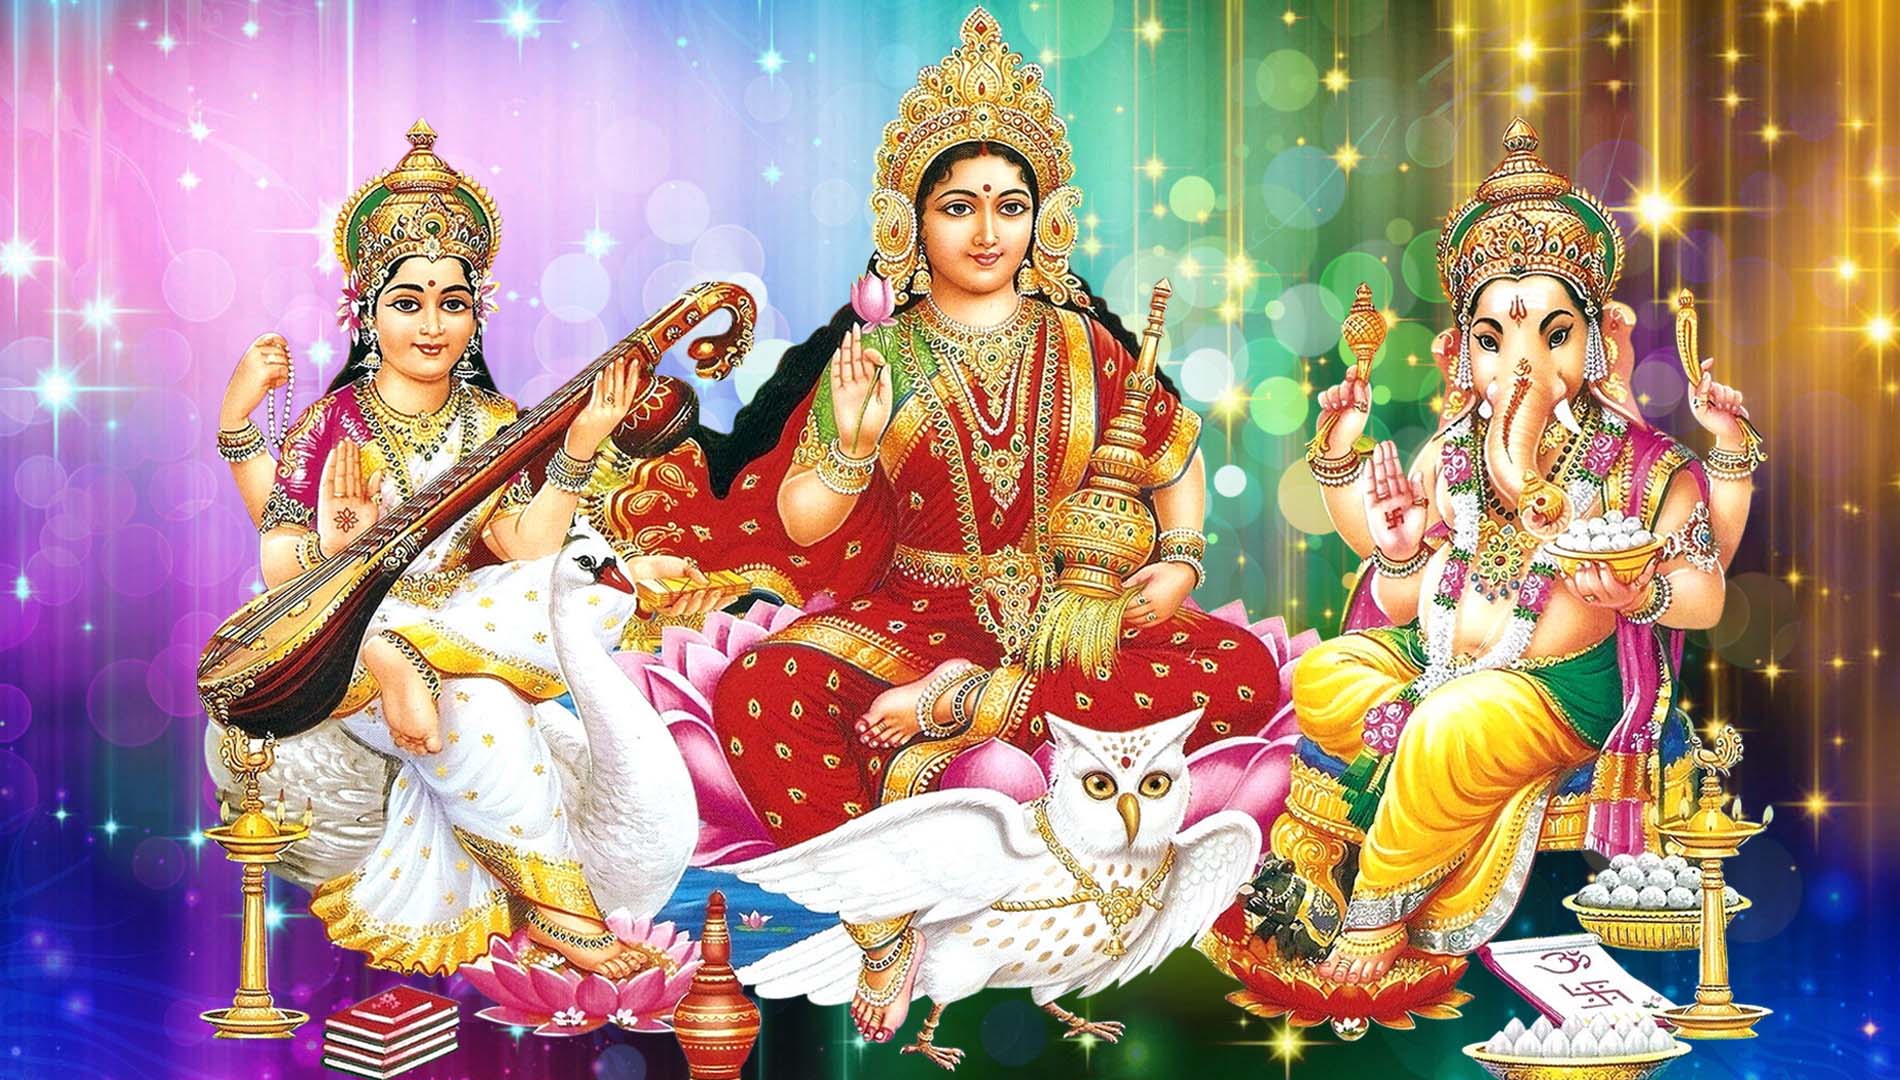 Lakshmi Ganesh Saraswati Desktop Wallpapers Hd | Goddess ...